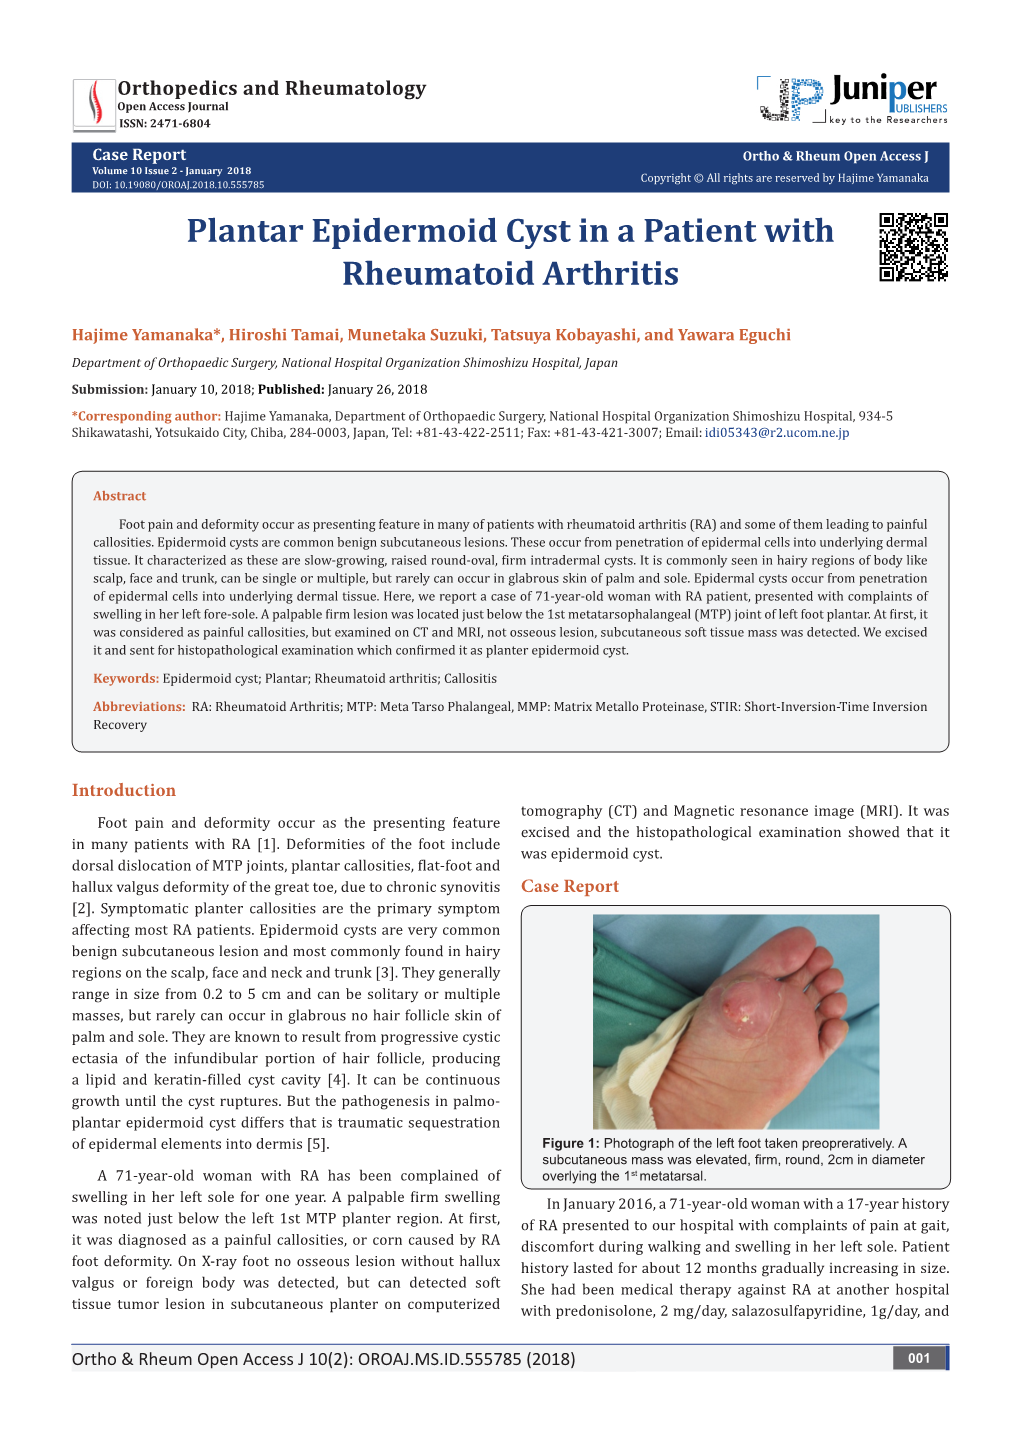 Plantar Epidermoid Cyst in a Patient with Rheumatoid Arthritis